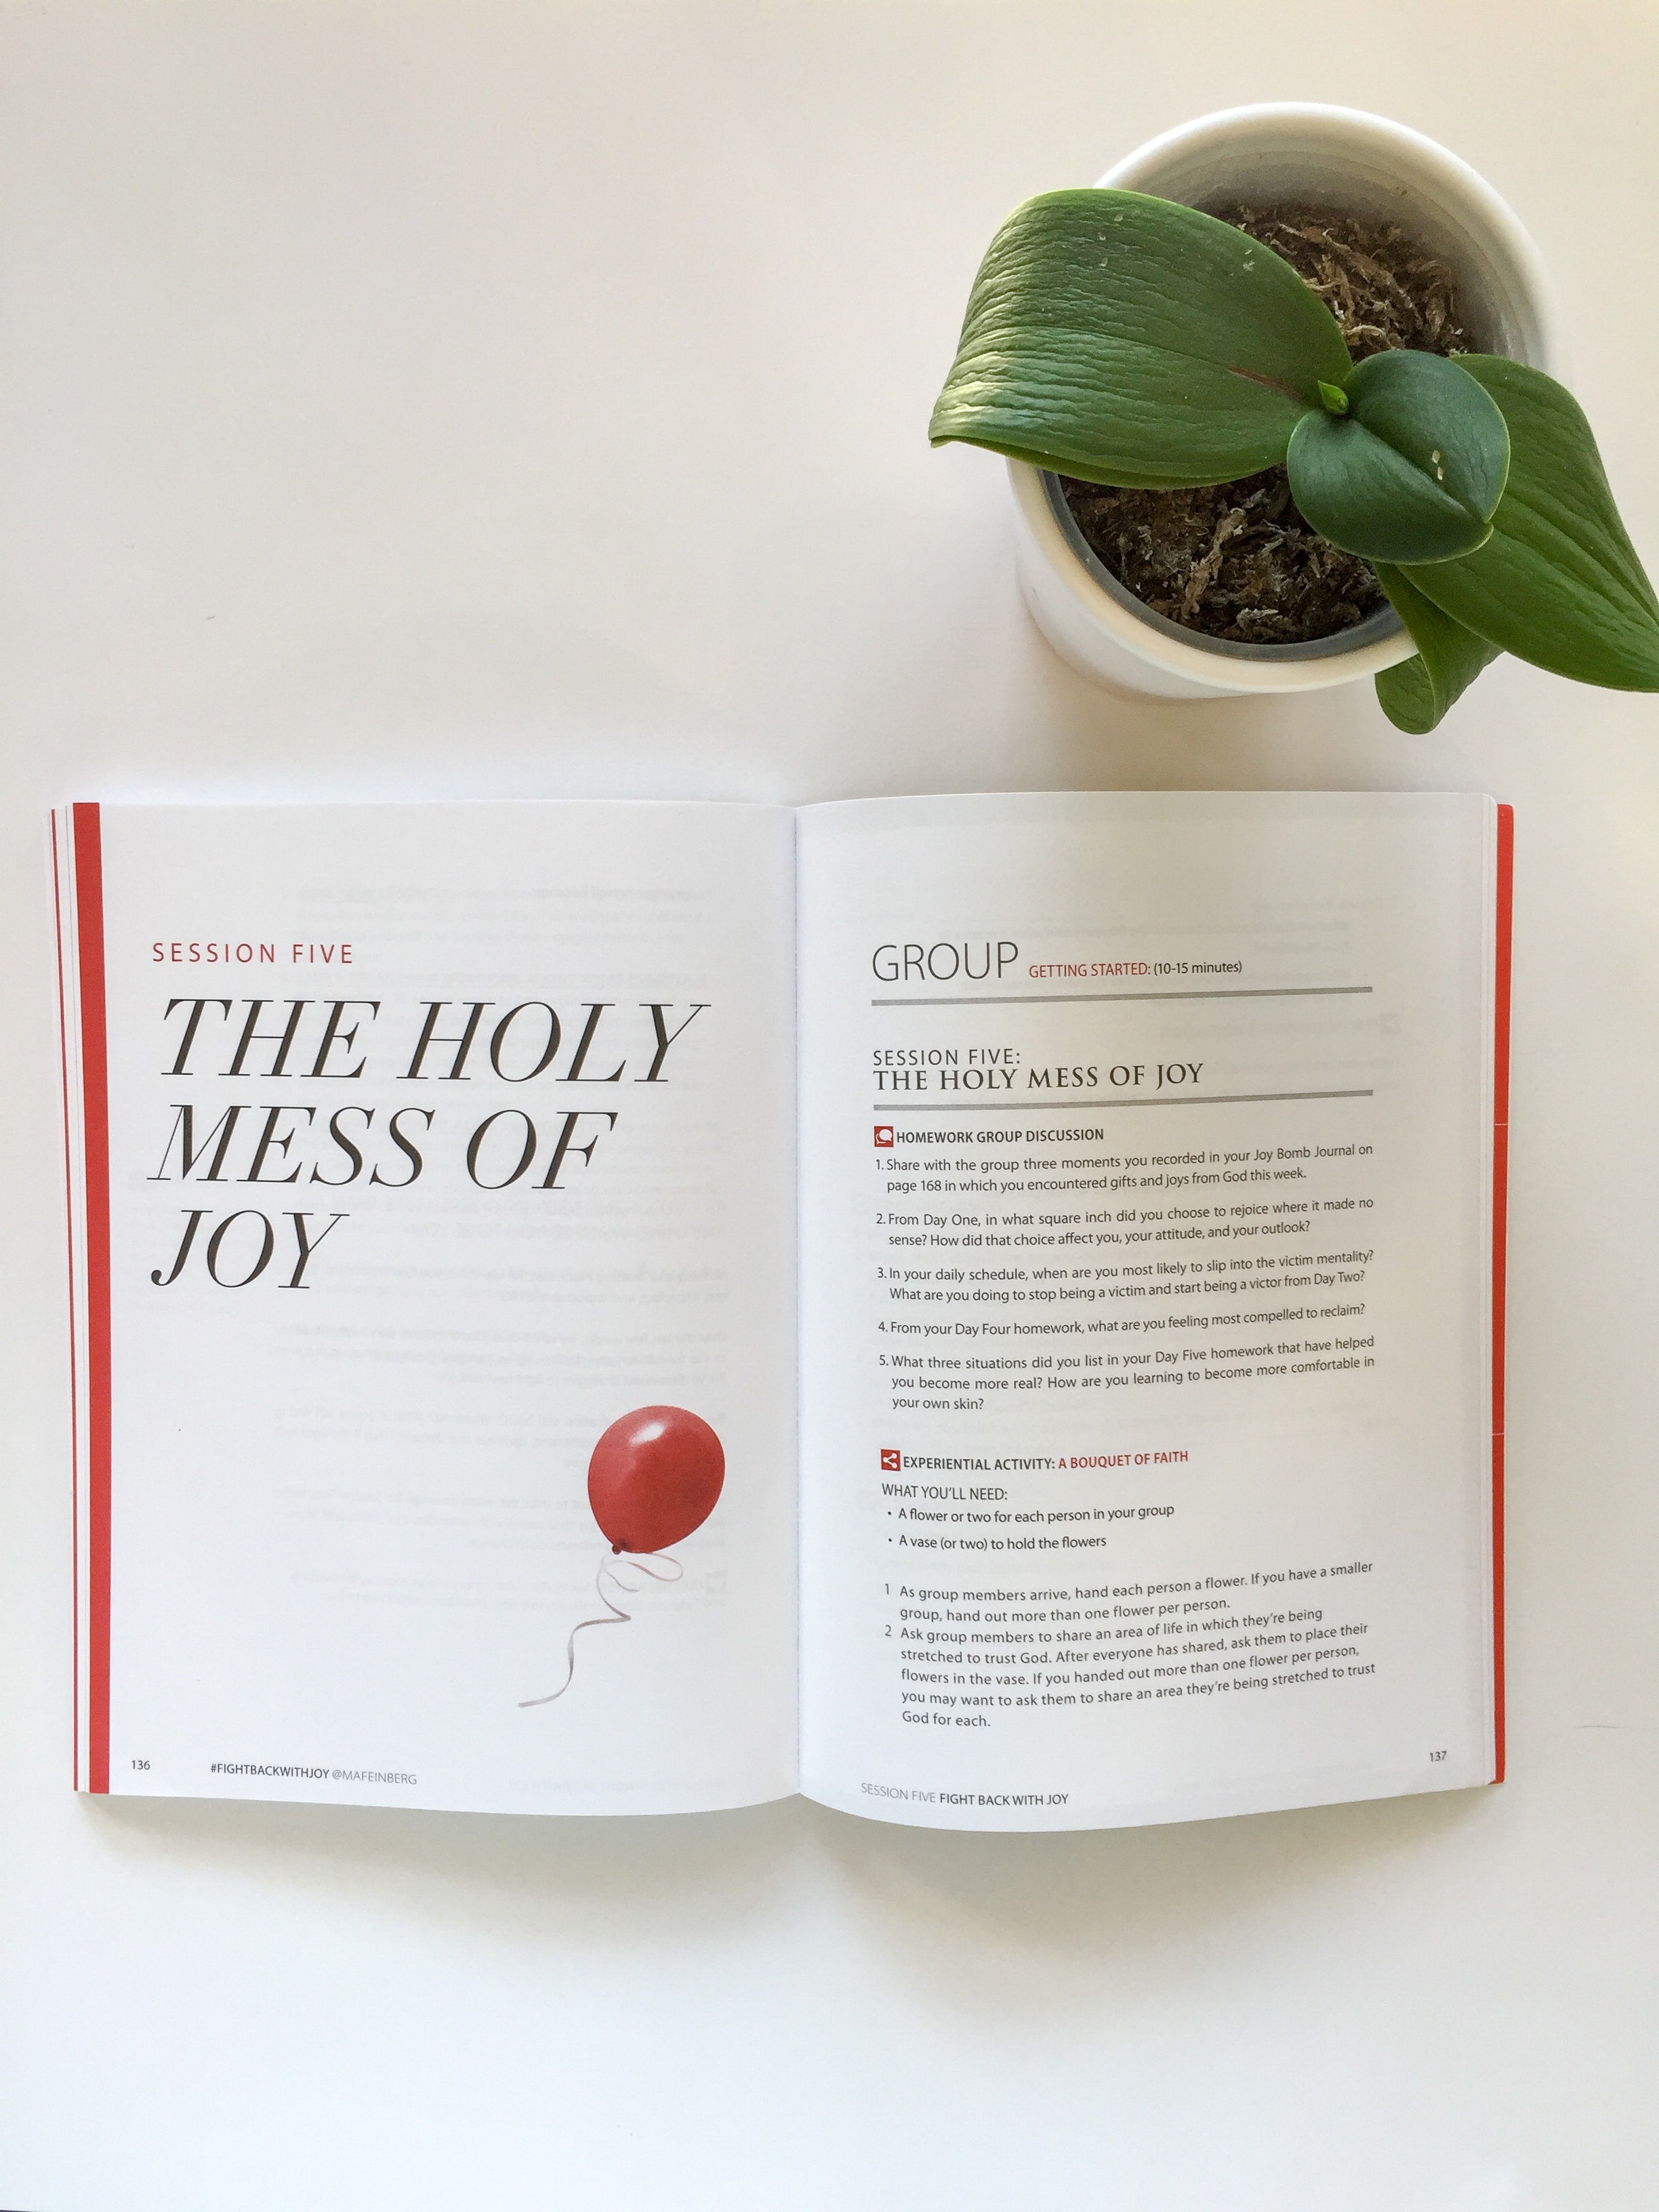 Fight Back With Joy Additional Workbook